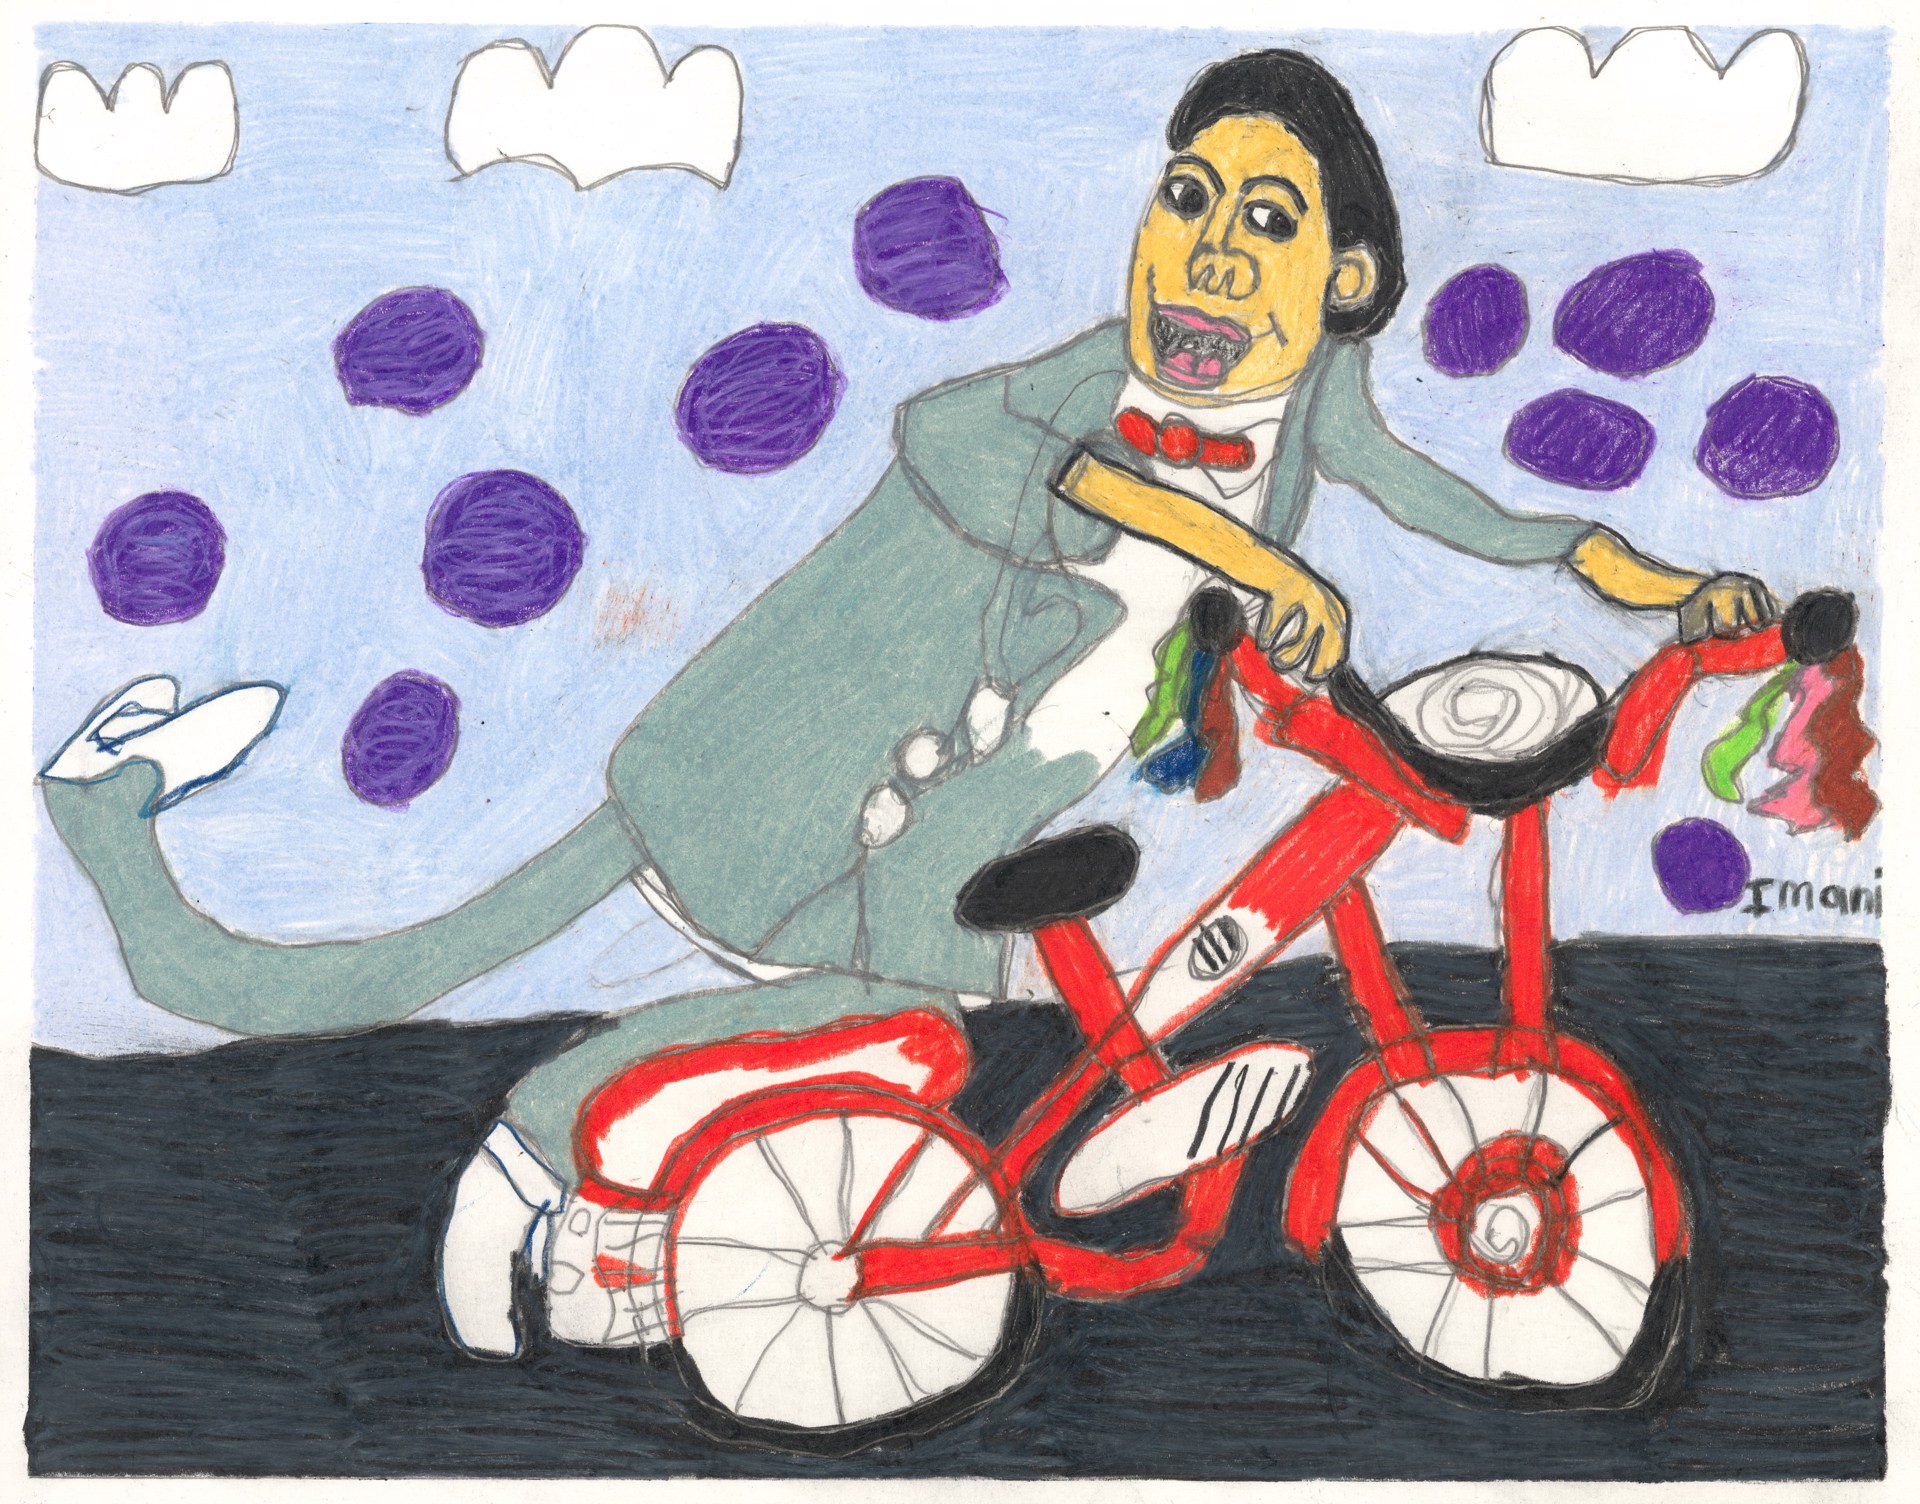 Pee-wee Herman and His Bike (FRAMED) by Imani Turner